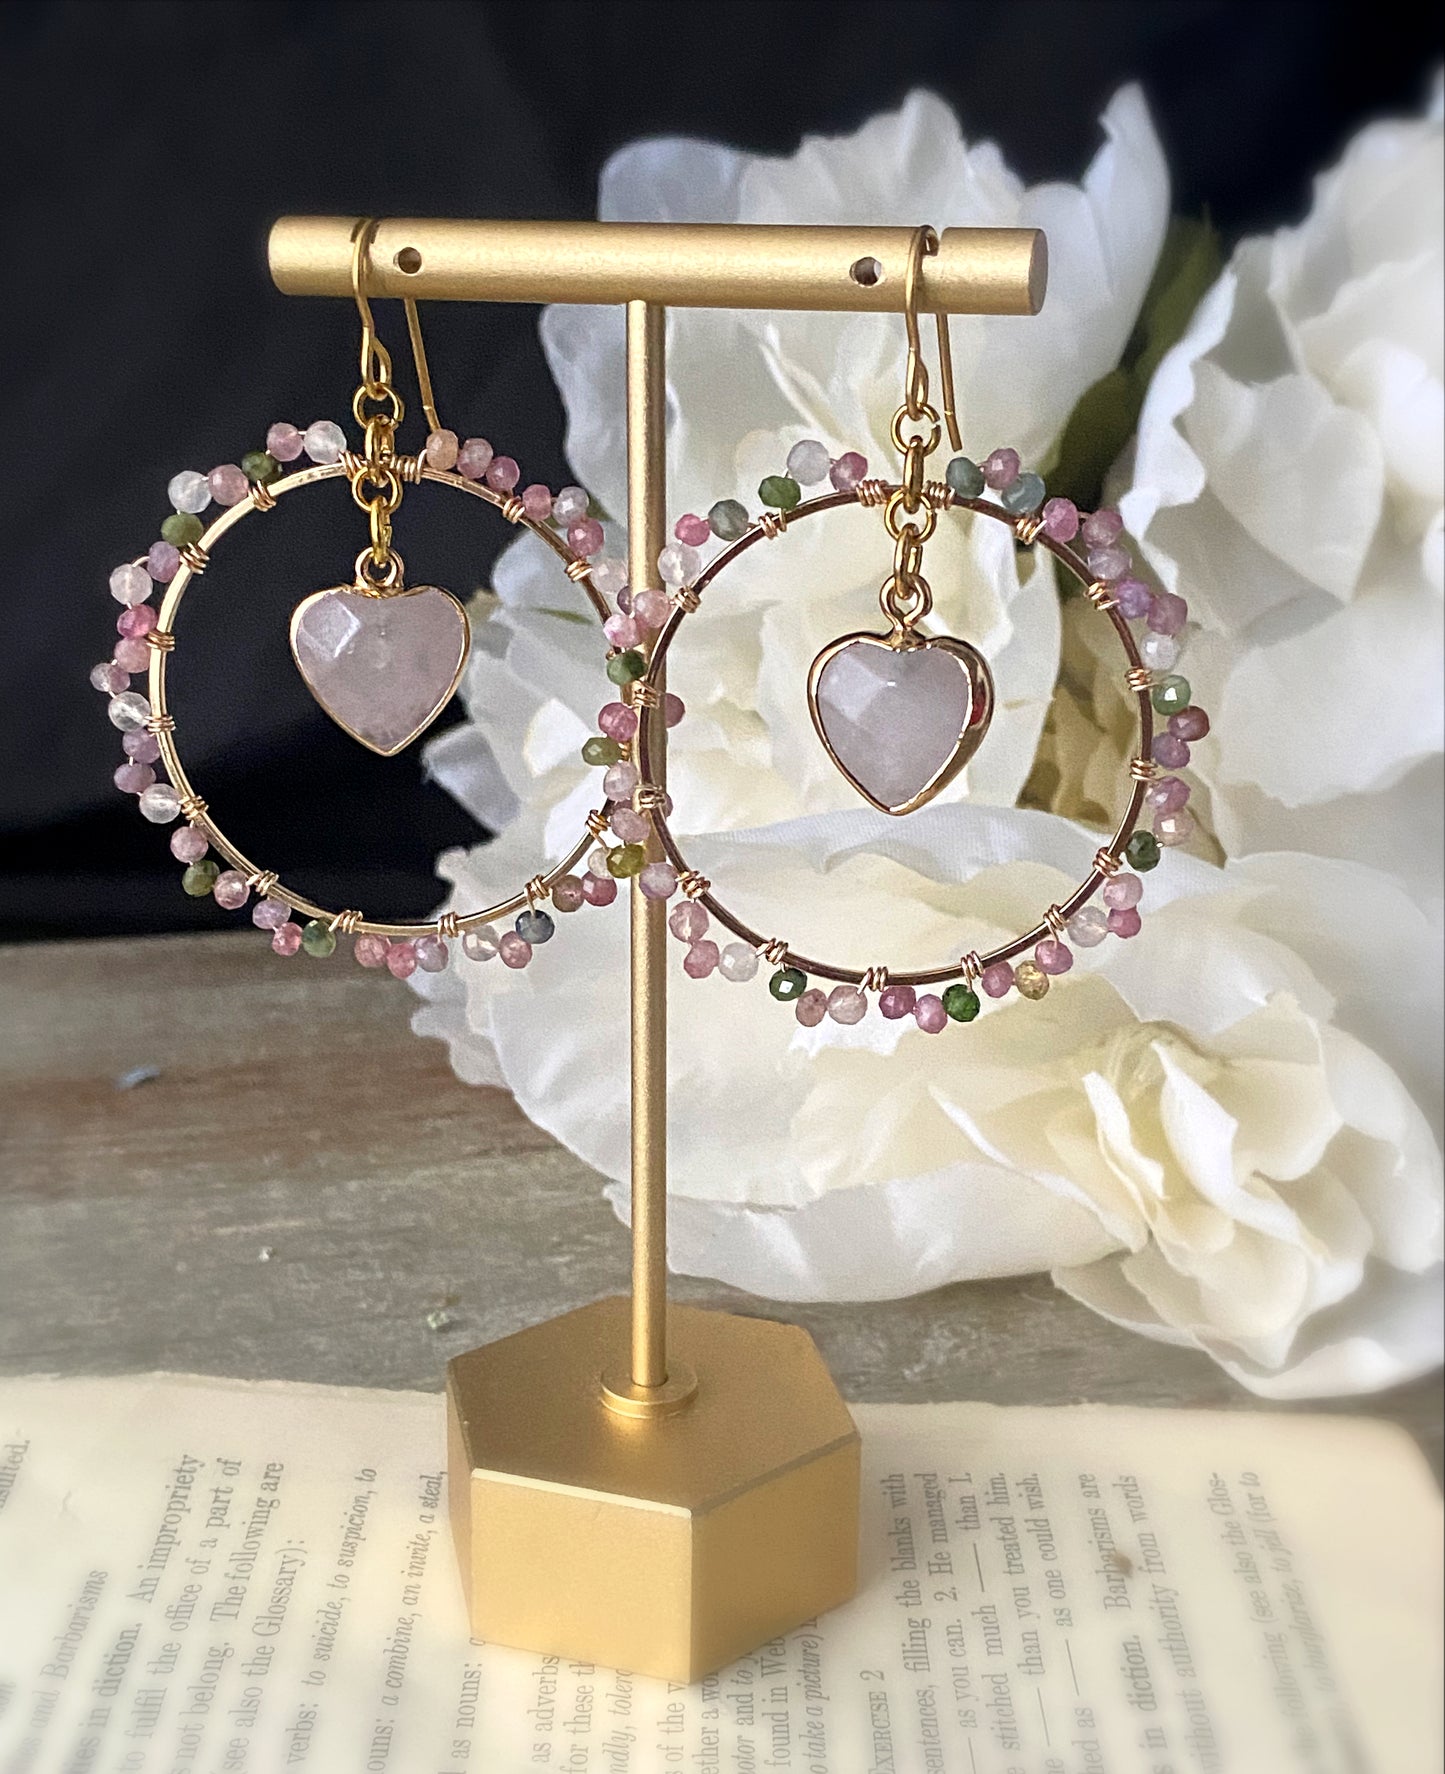 Rose quartz stone, tourmaline stone, gold hoops, earrings, jewelry